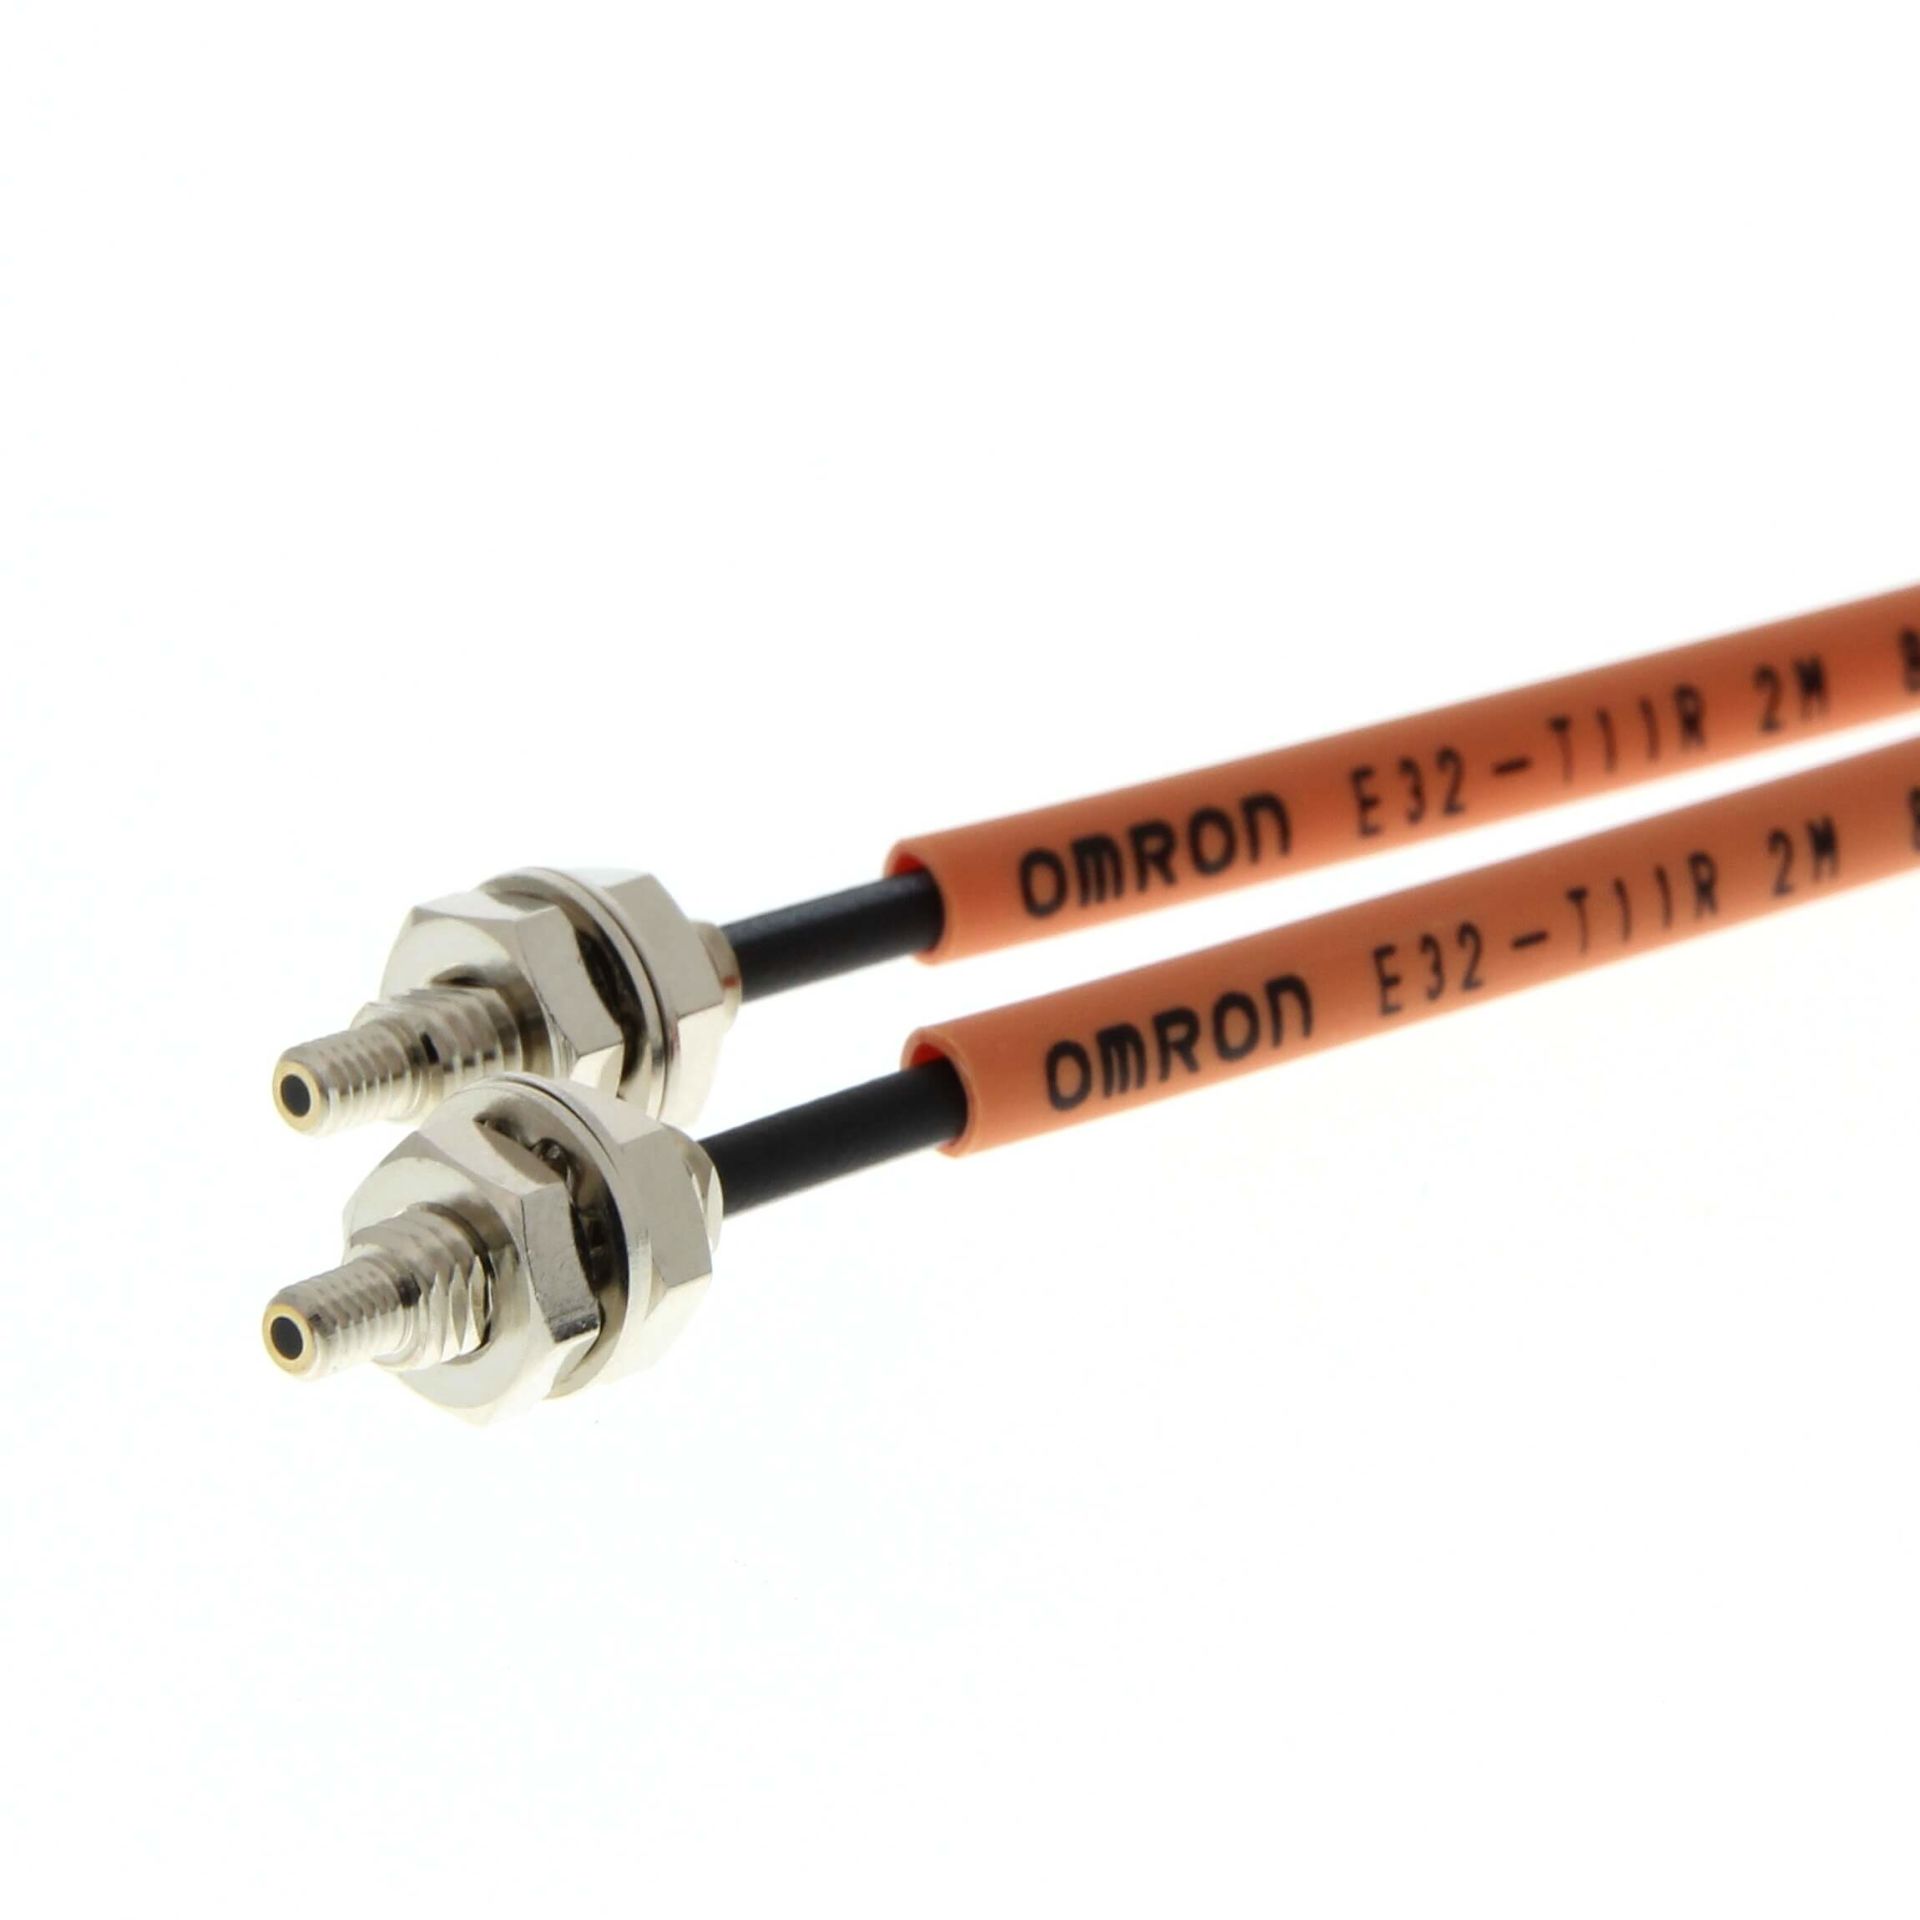 Omron - E32-T11R 5M  Fiber optik sensör, karşılıklı, M4 kafa, yüksek esneklik R1 fiber, 5m kablo